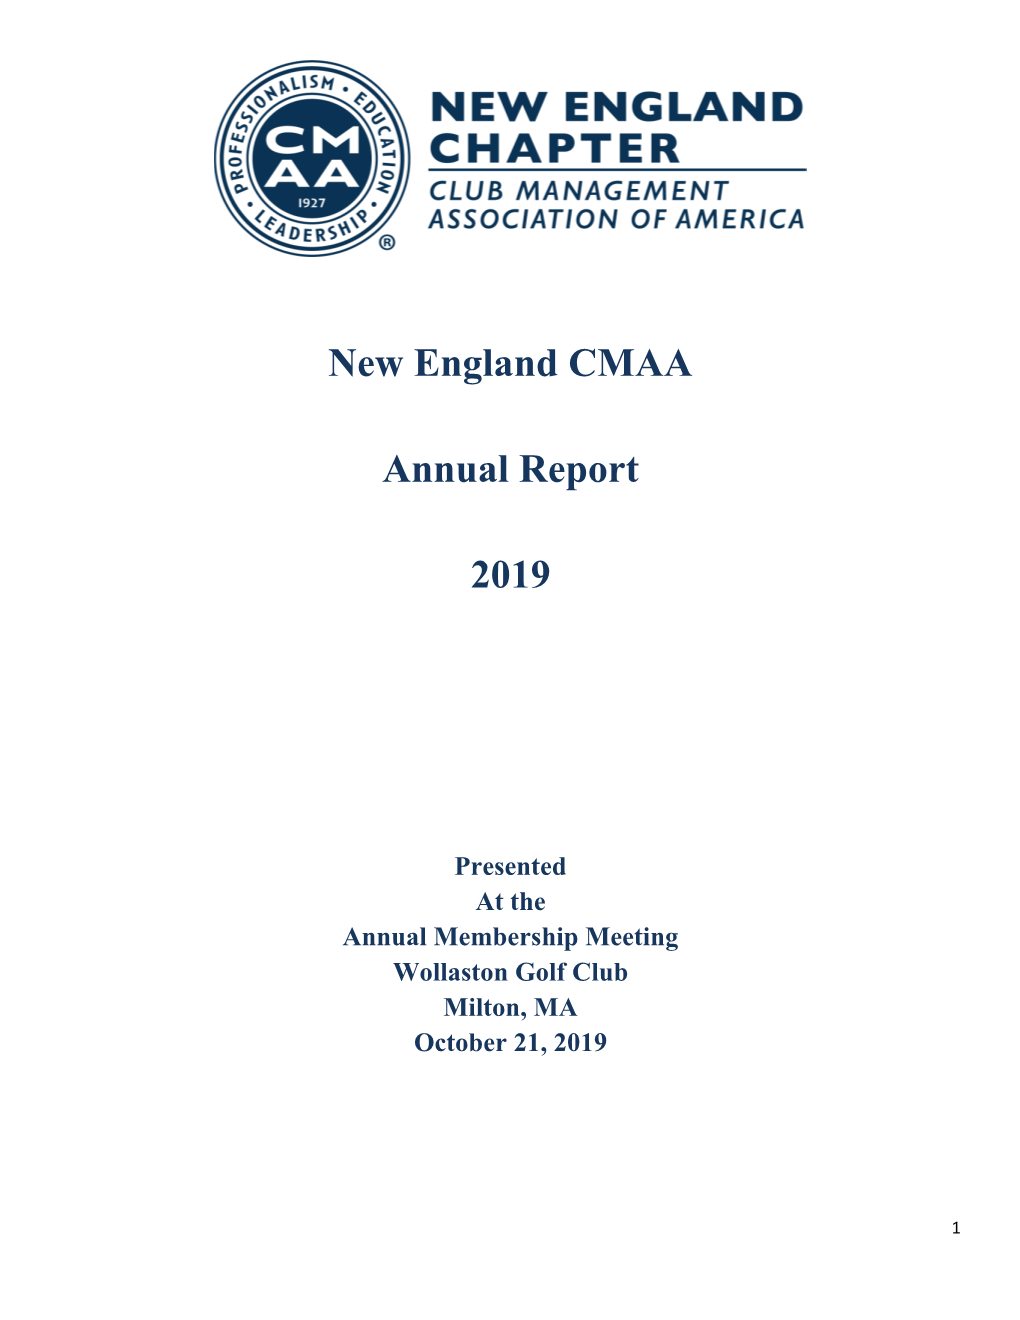 New England CMAA Annual Report 2019